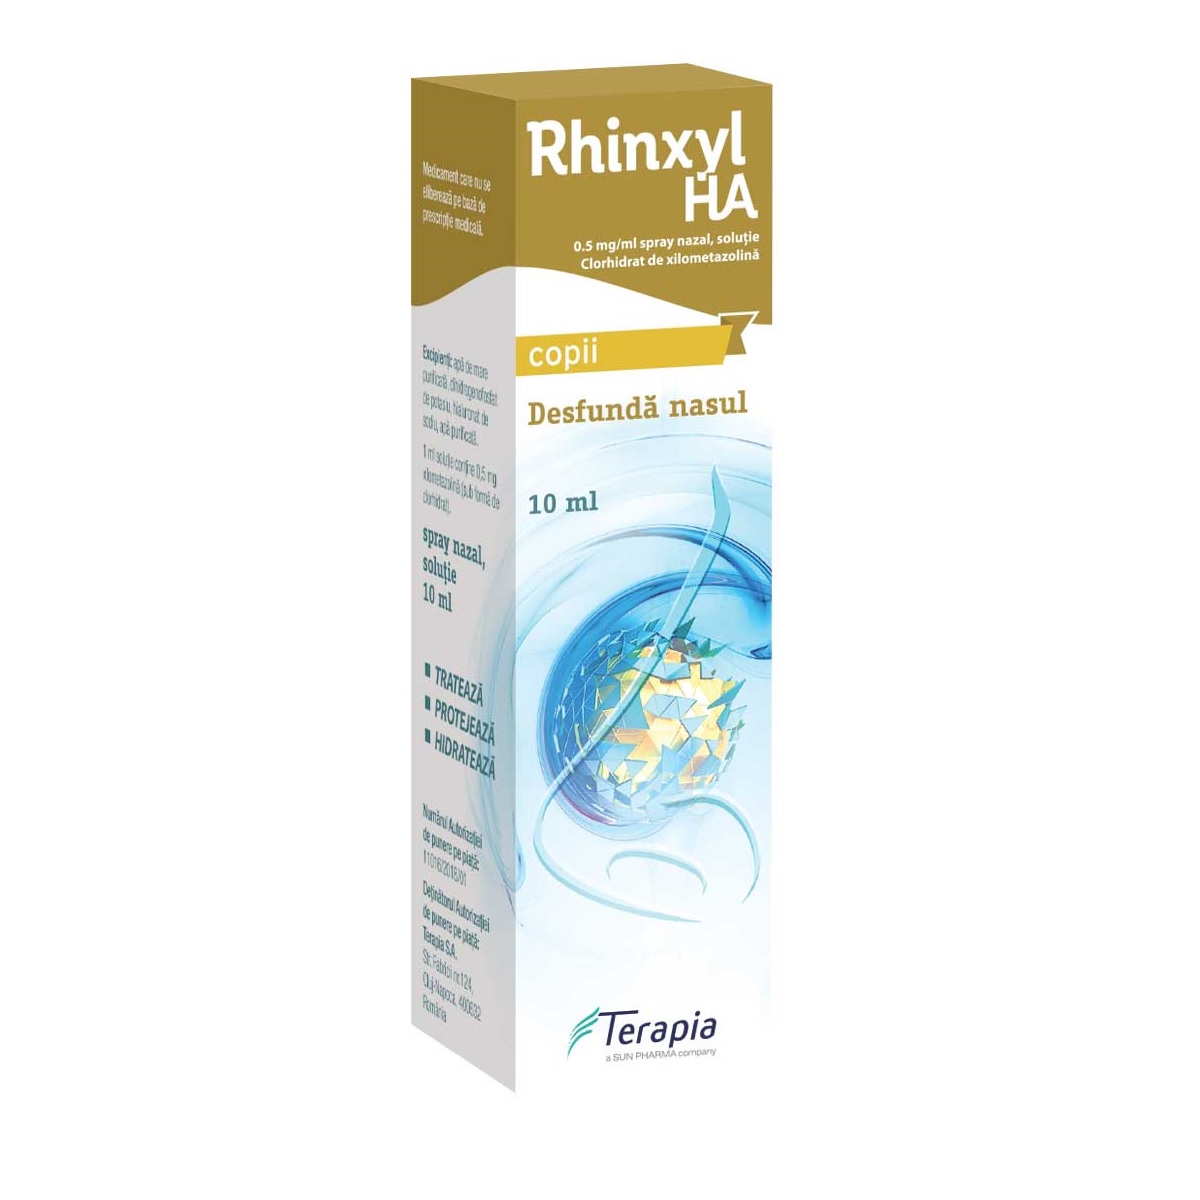 OTC - medicamente fara reteta - Rhinxyl HA 0,5mg/ml spray nazal copii x 10ml, medik-on.ro